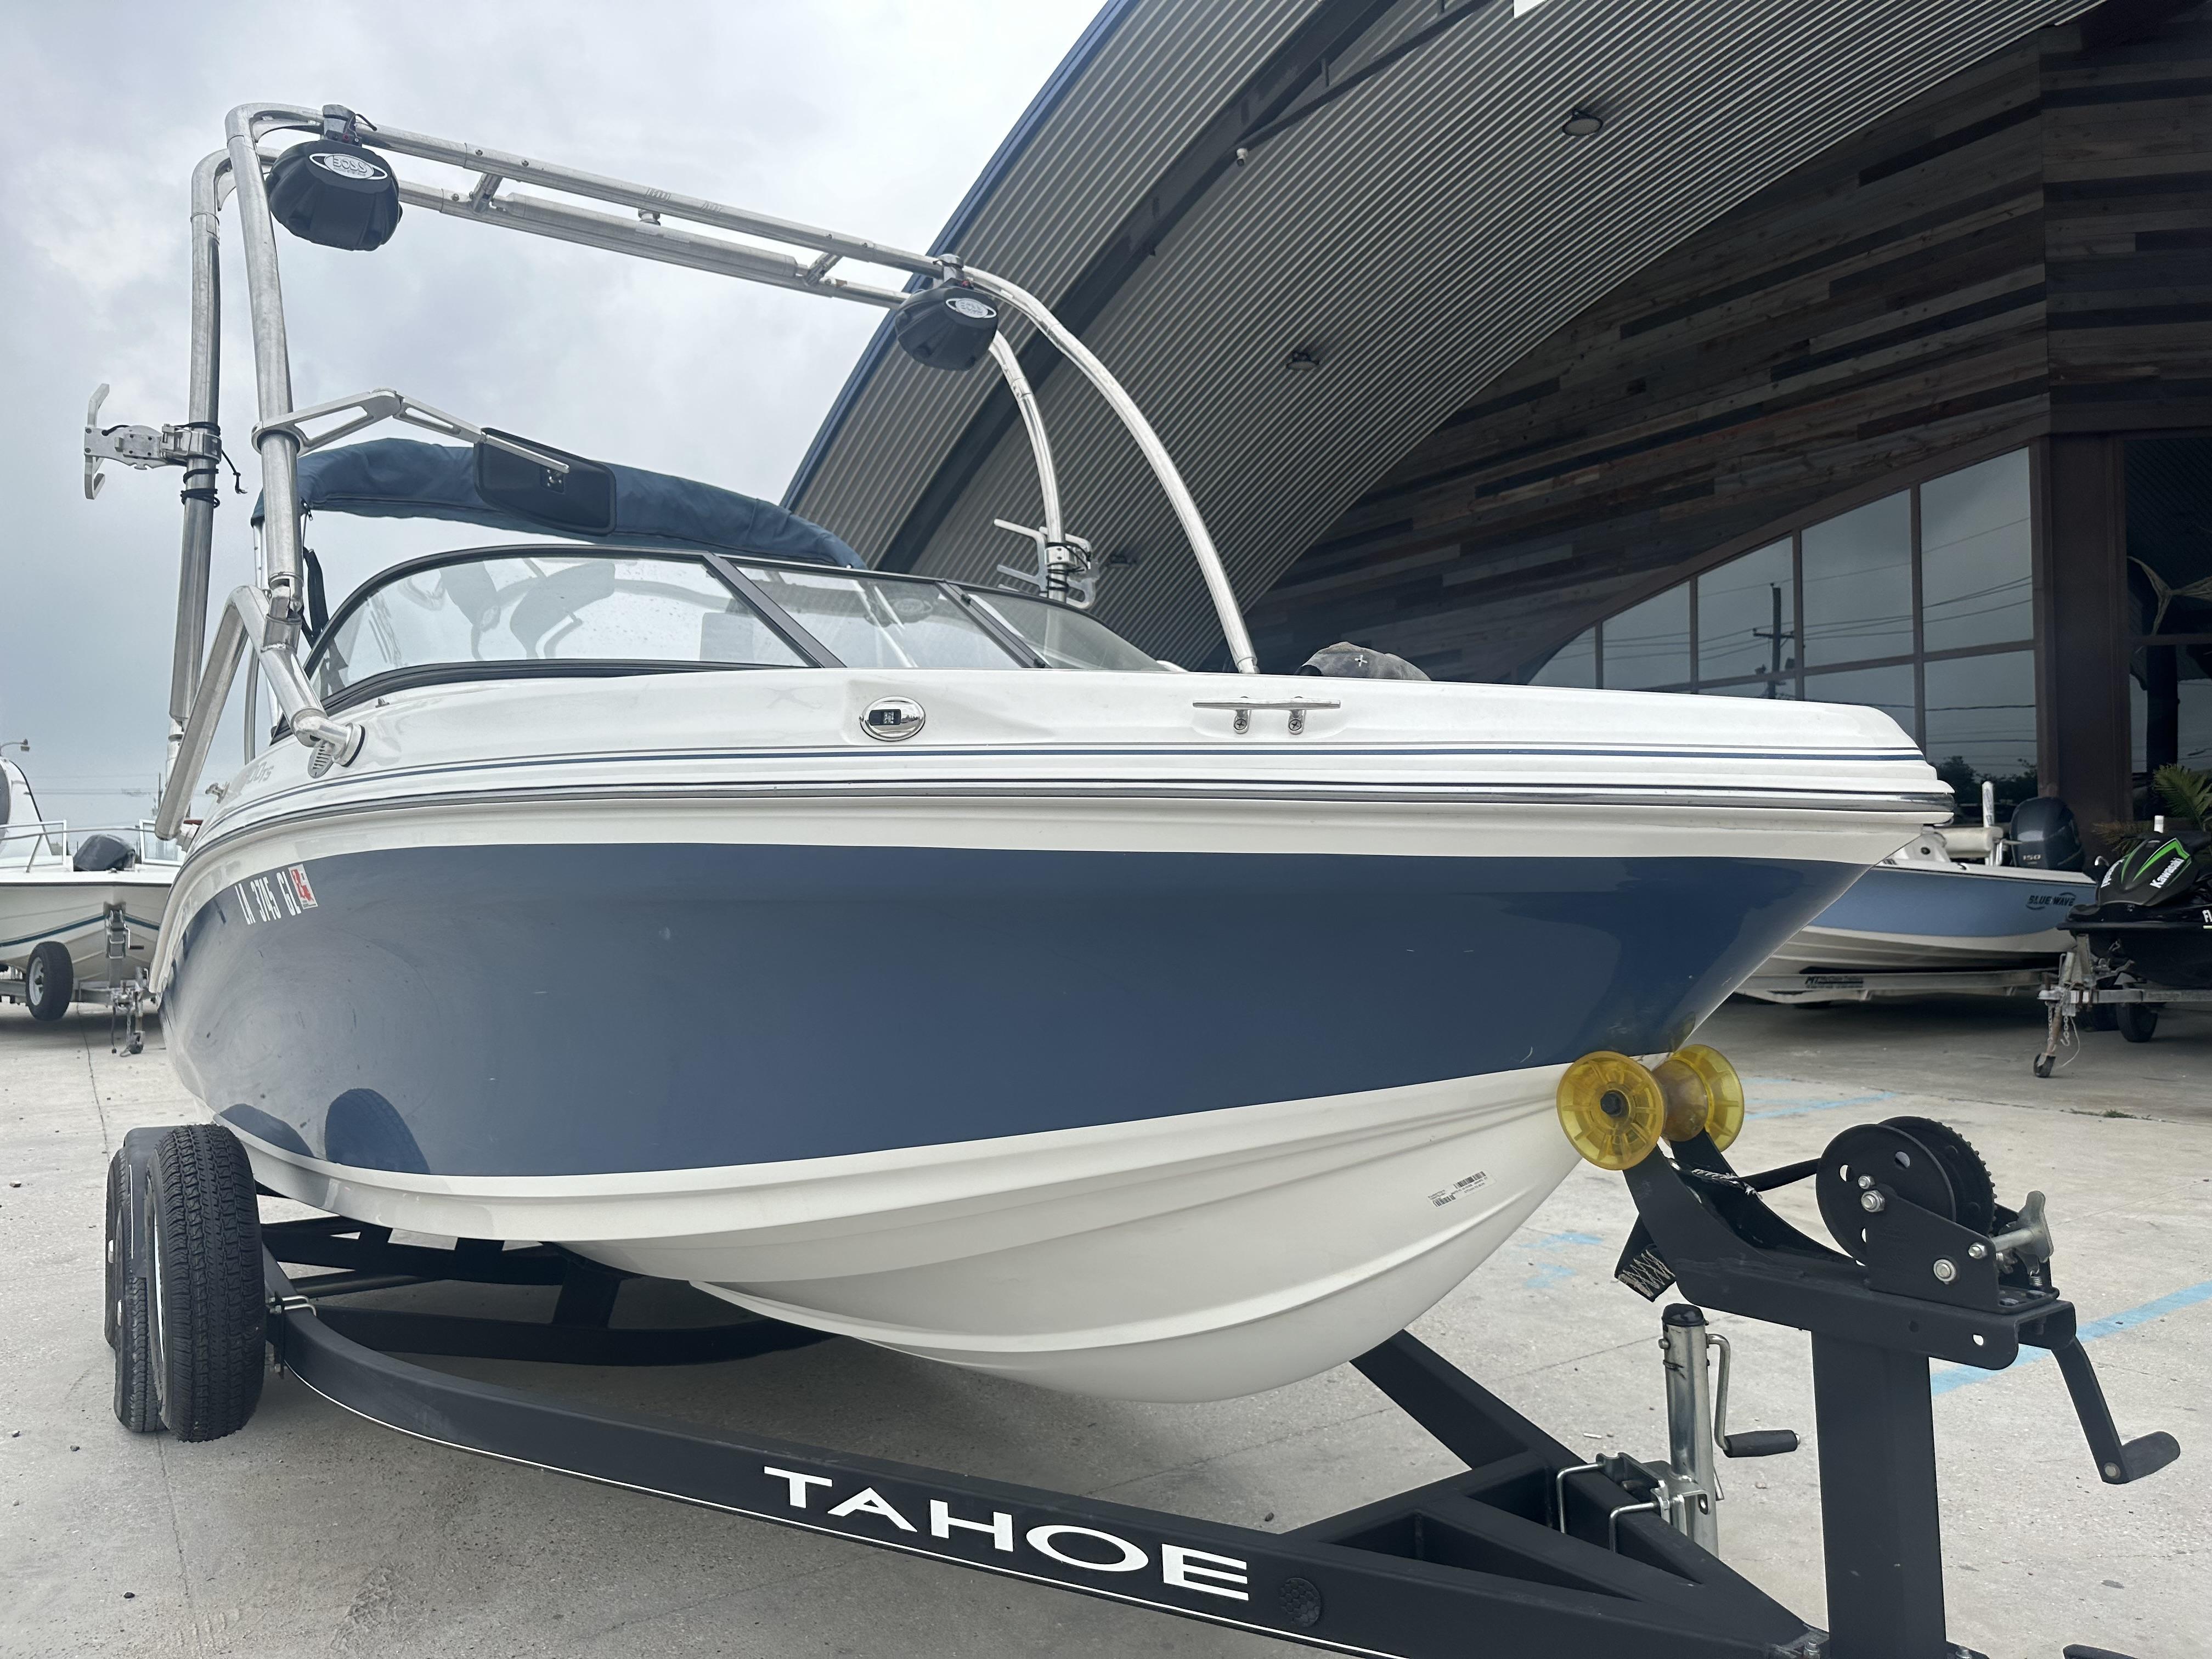 2019 Tahoe 500 TS